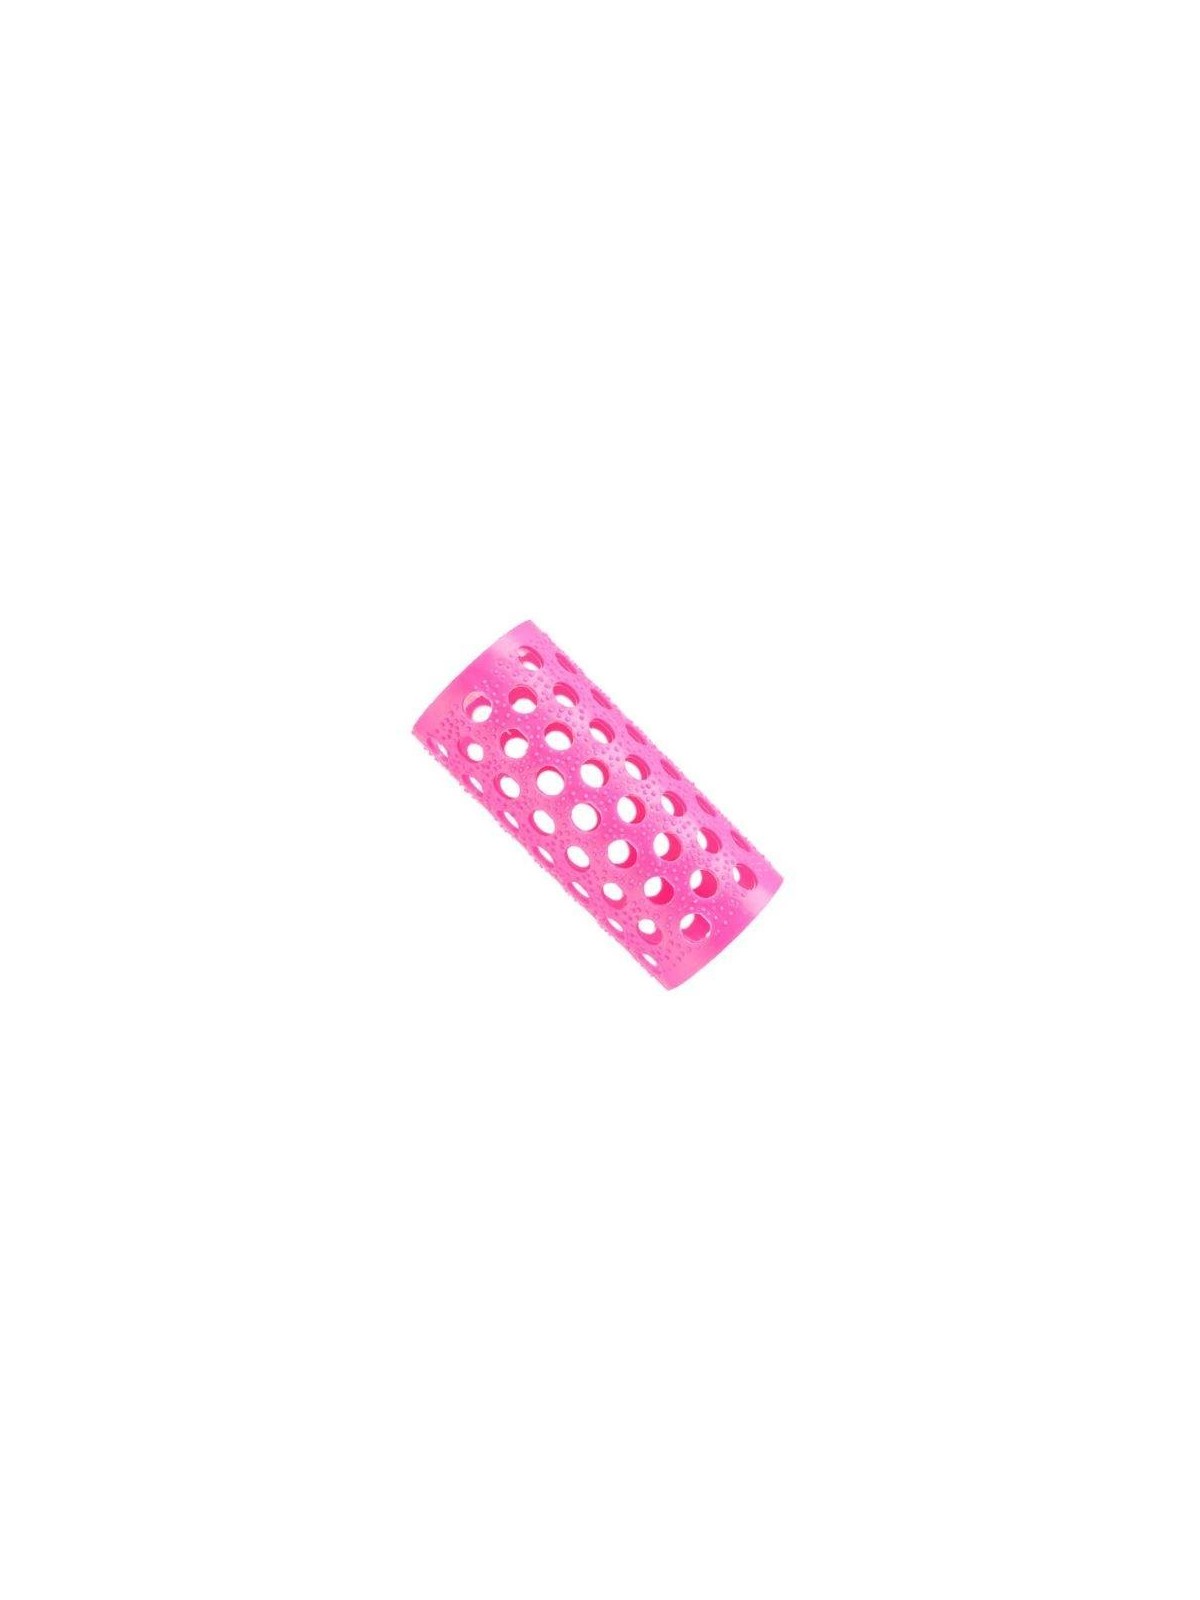 Bucles rosa translúcido 25mm. Eurostil